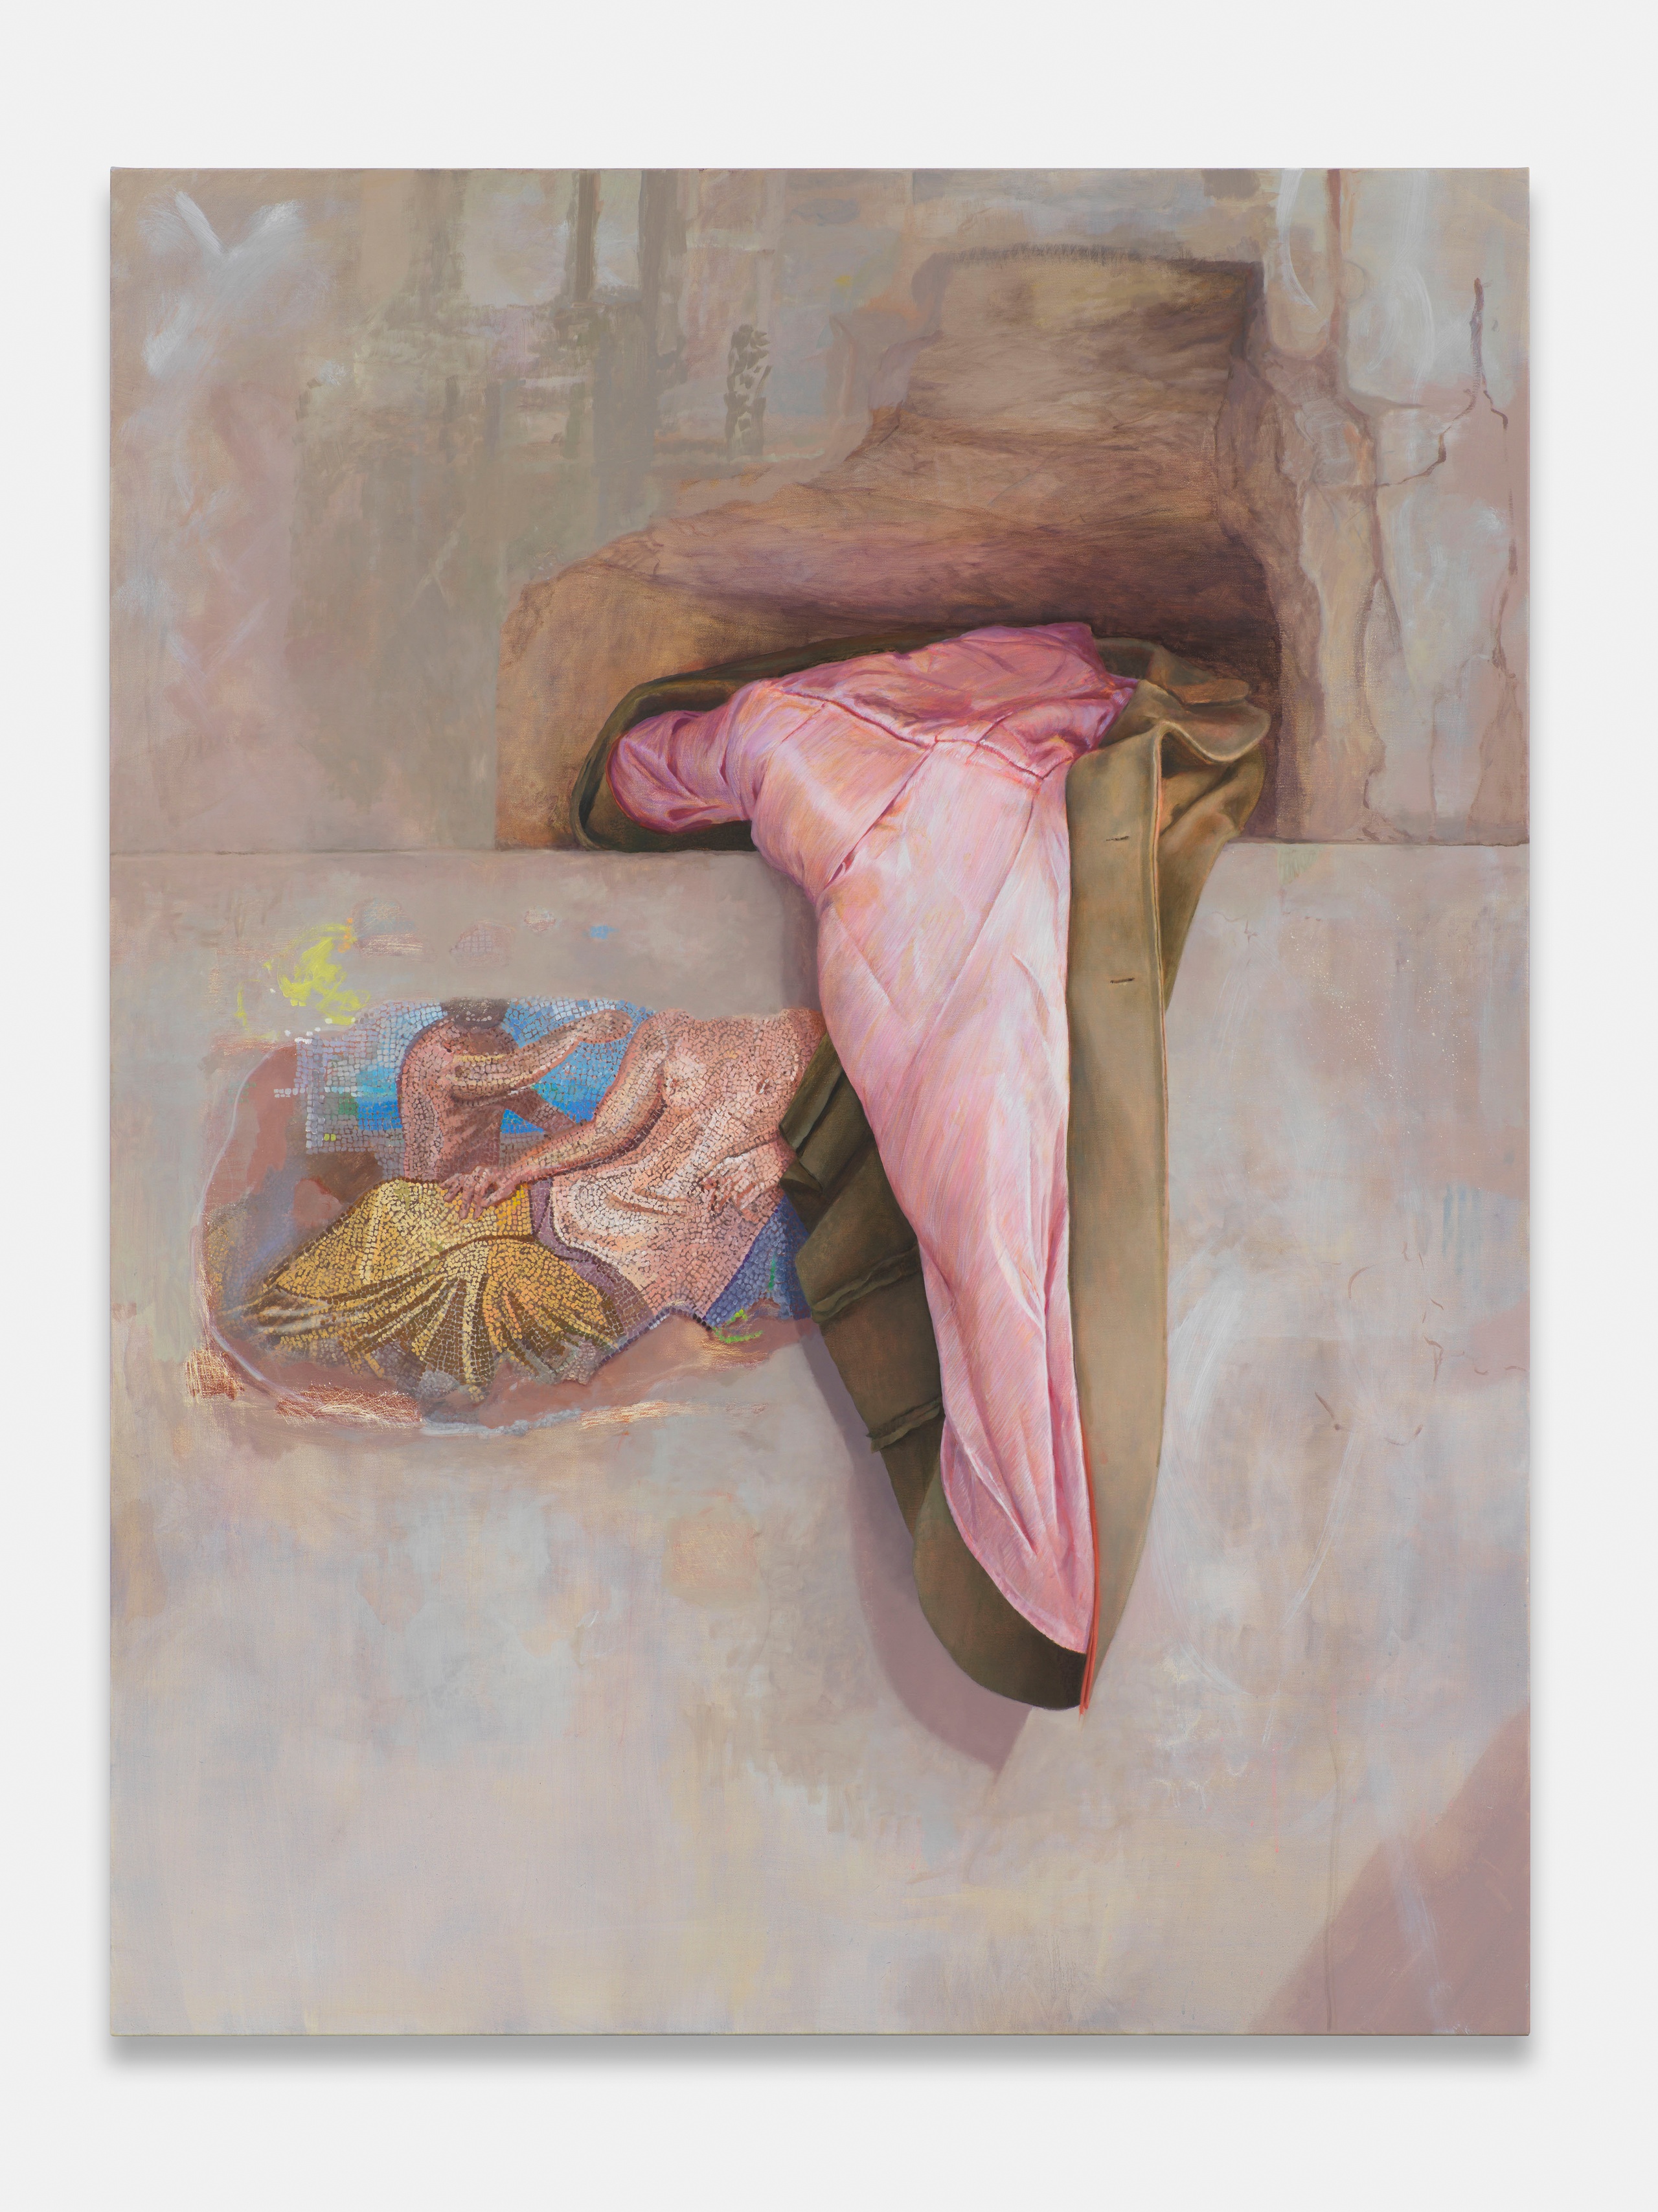 Monika BaerUntitled, 2022/2023oil on canvas210 x 160 cm | 82 2/3 x 63 in